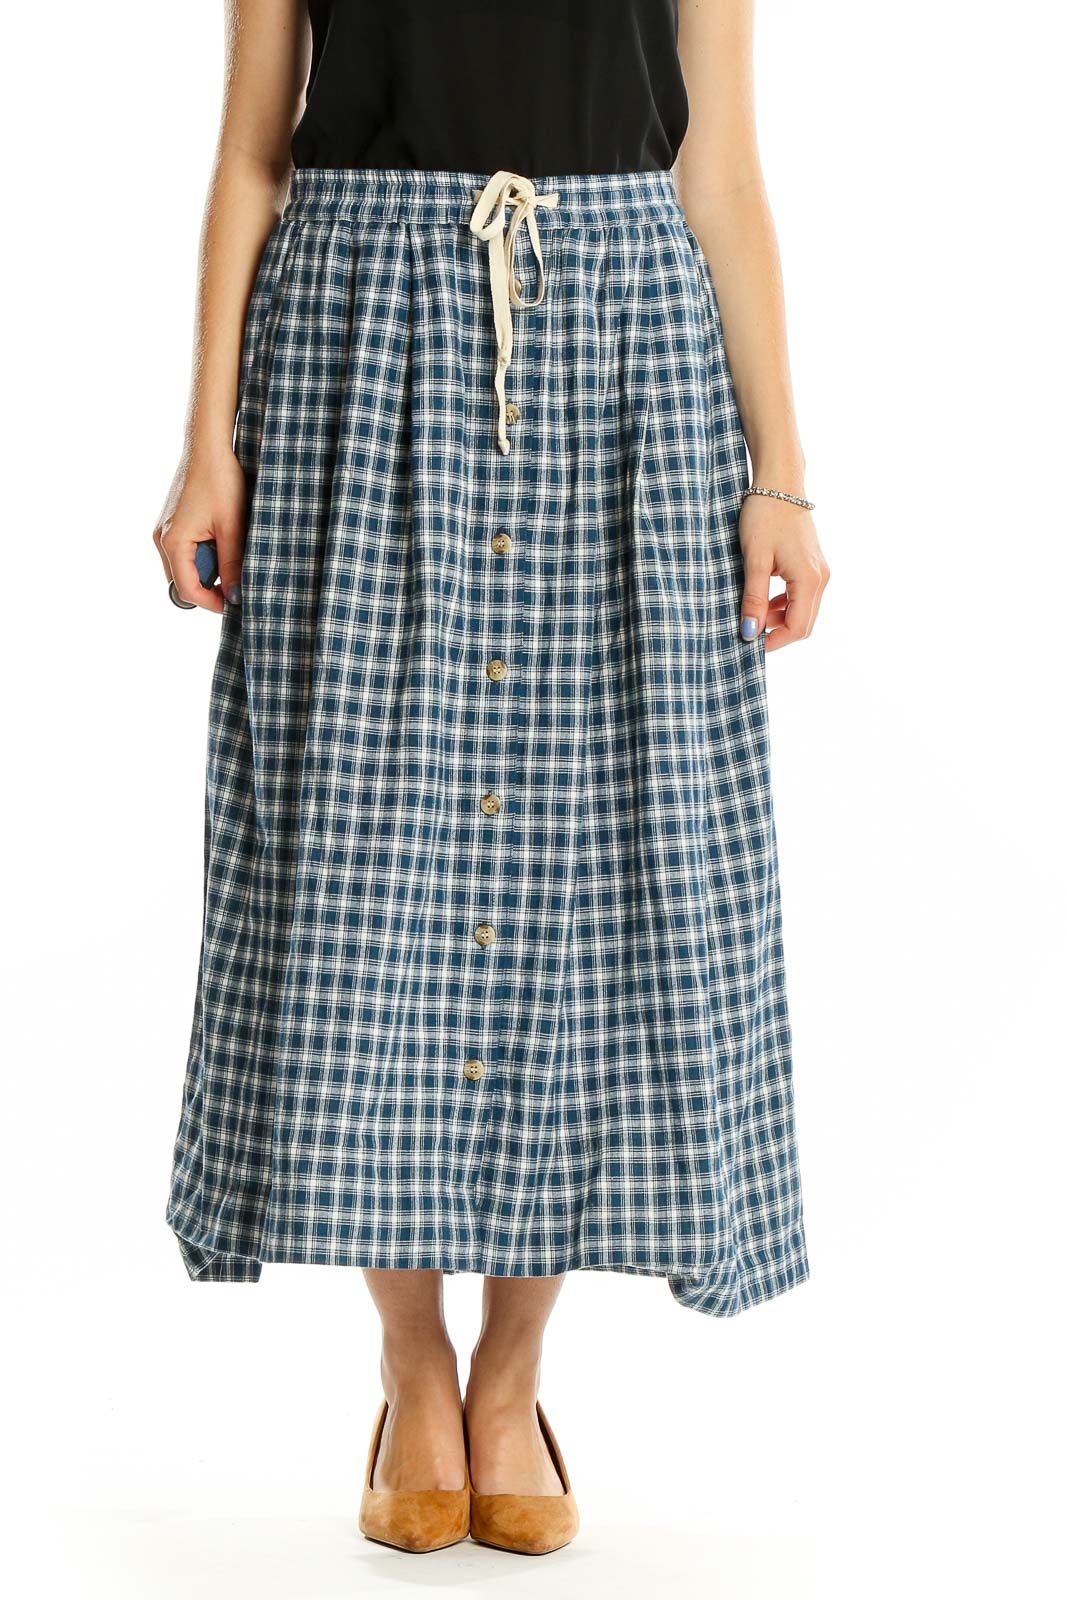 Blue Plaid Vintage Skirt Front